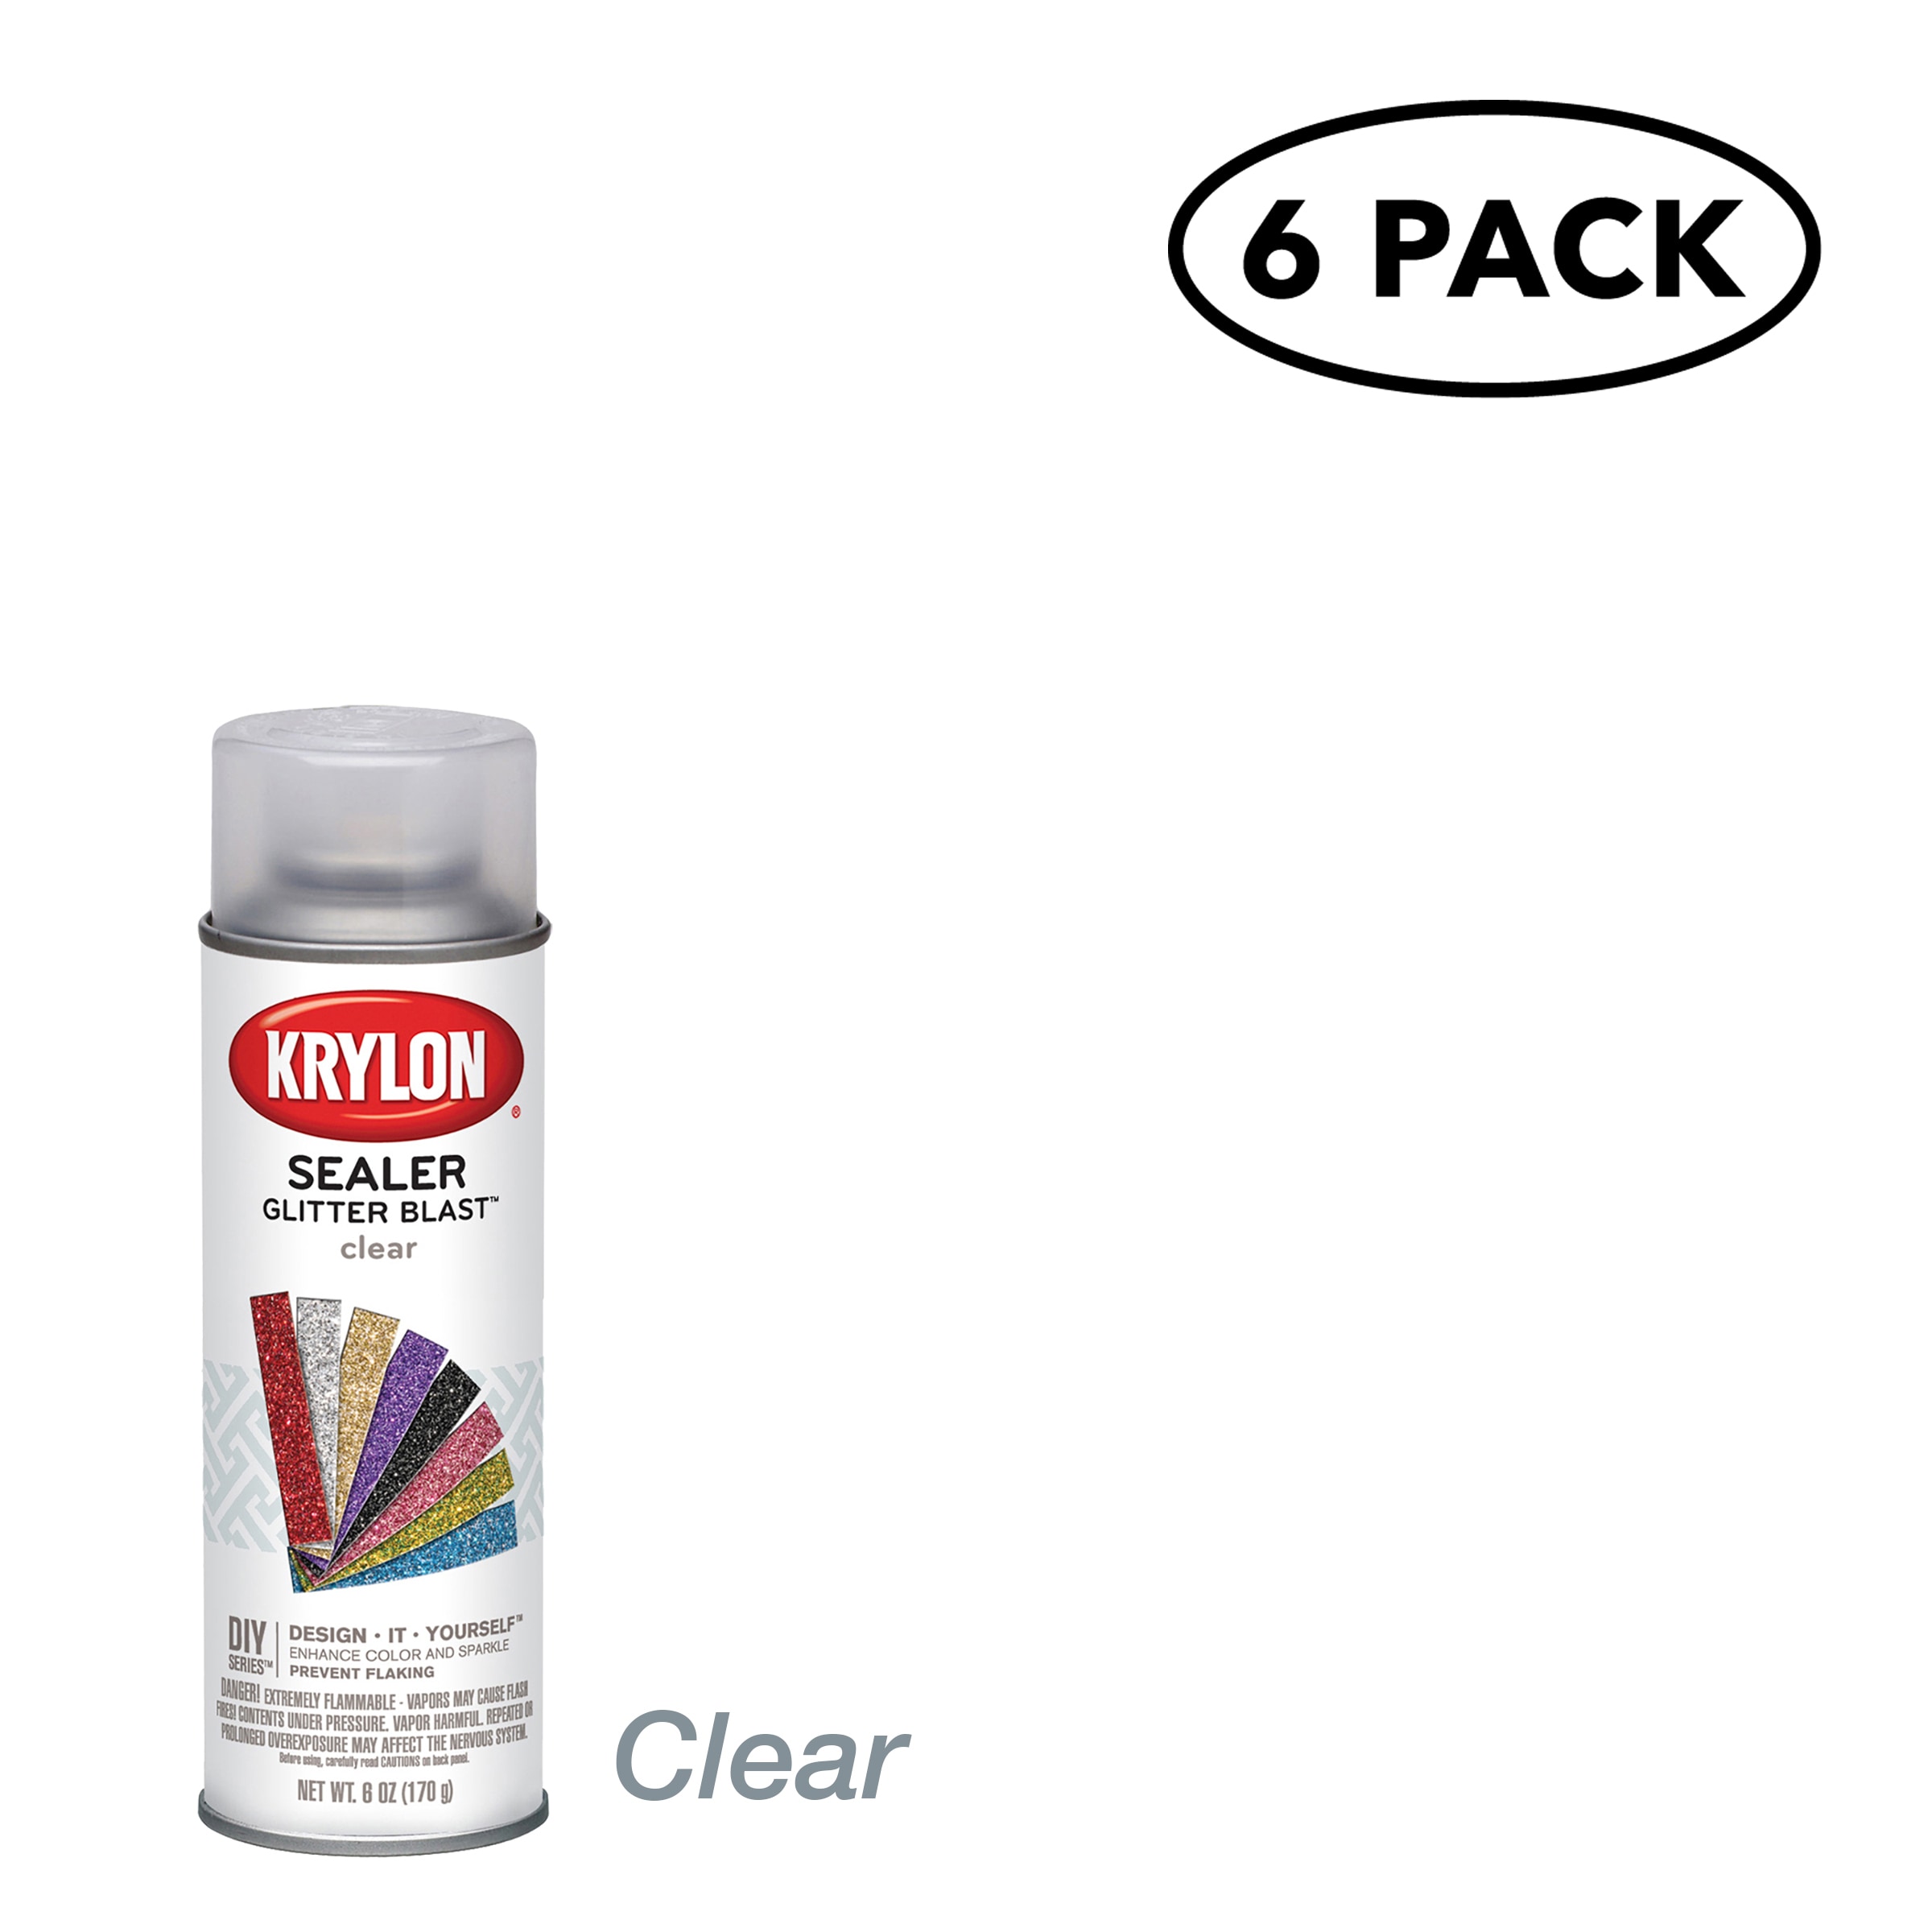 Krylon Glitter Blast Glitter Spray Paint Fierce Fuchsia 5.75 oz